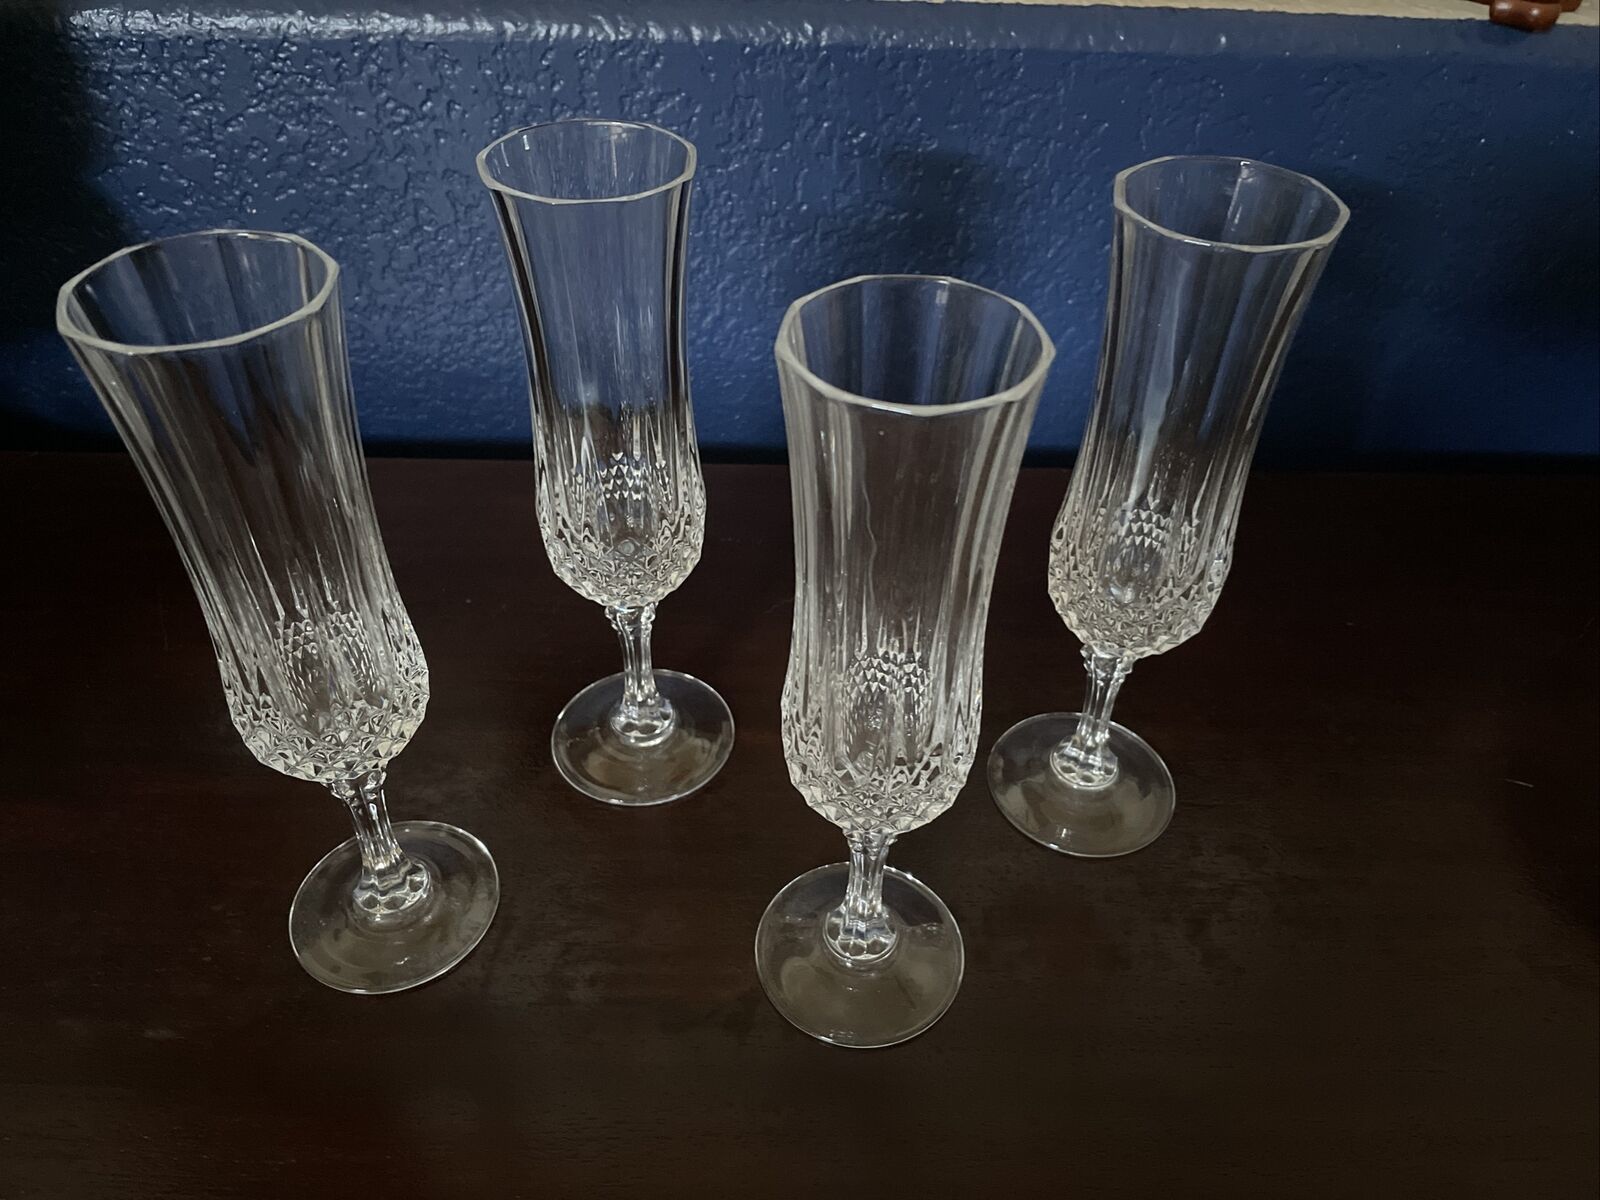 Primary image for One Vintage Leaded Crystal Champagne Flute, Stemmed Crystal Cut Glass 4oz